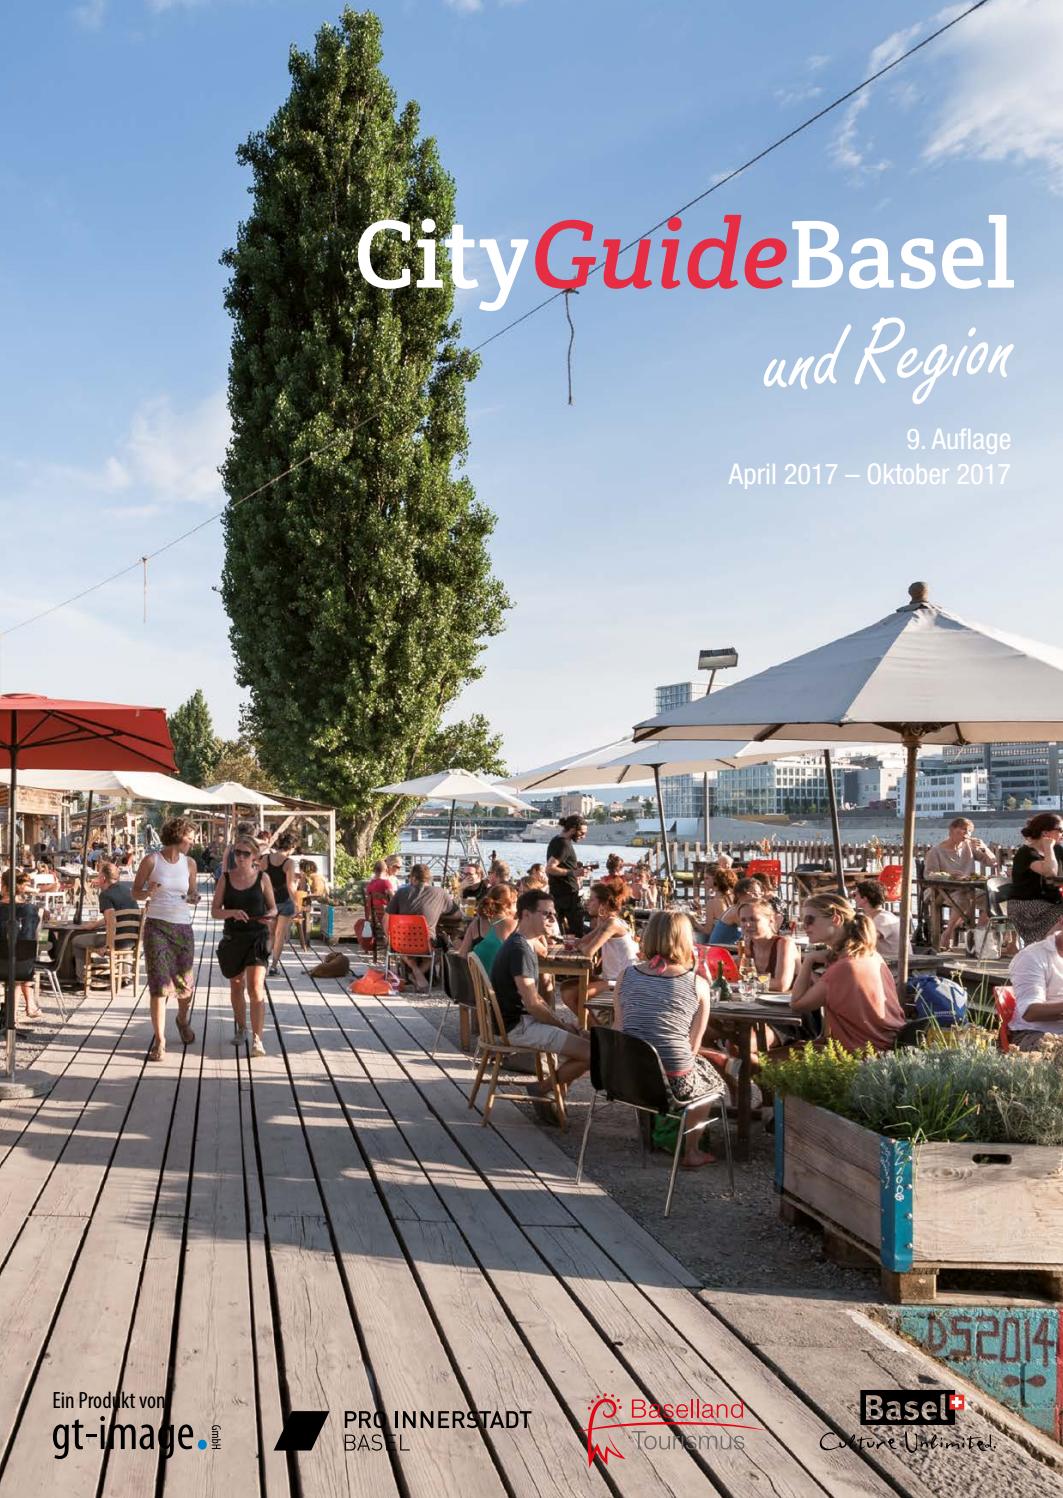 GemÃ¼segarten Anlegen Ideen Frisch City Guide Basel Und Region 1 2017 by Basel tourism issuu